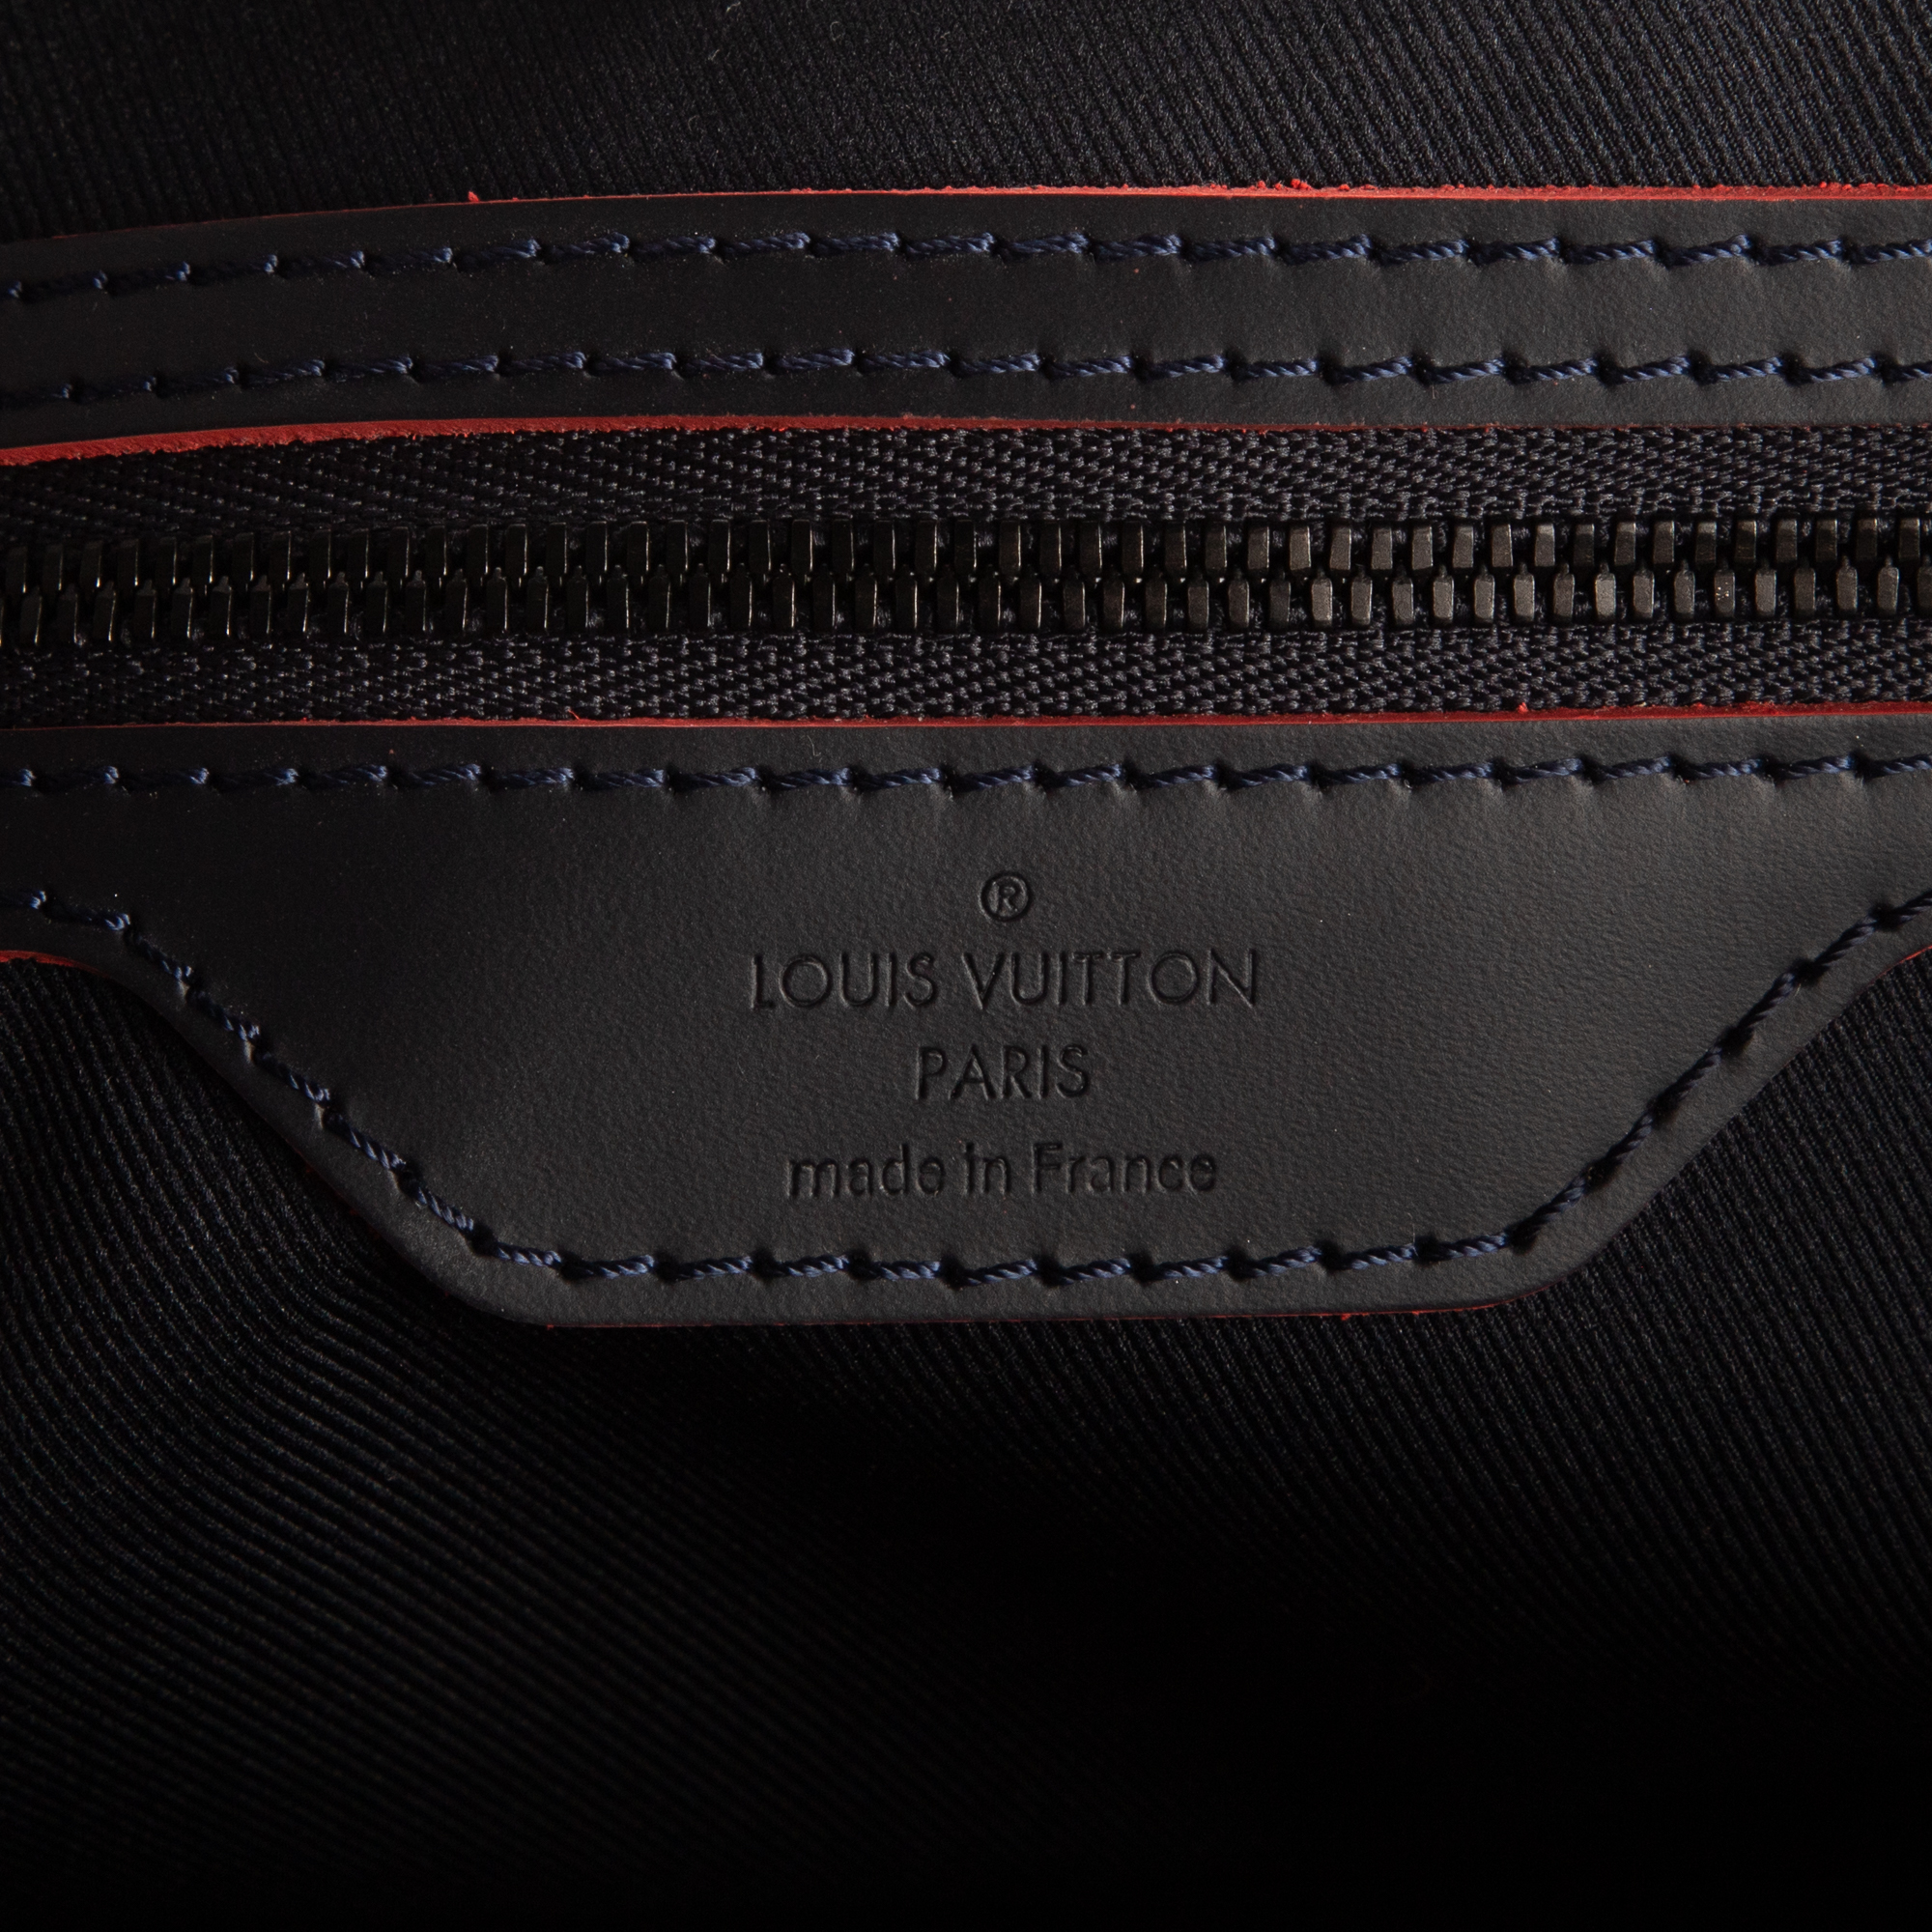 Louis Vuitton, Keepall Bandouliere Monogram 50 Upside Down